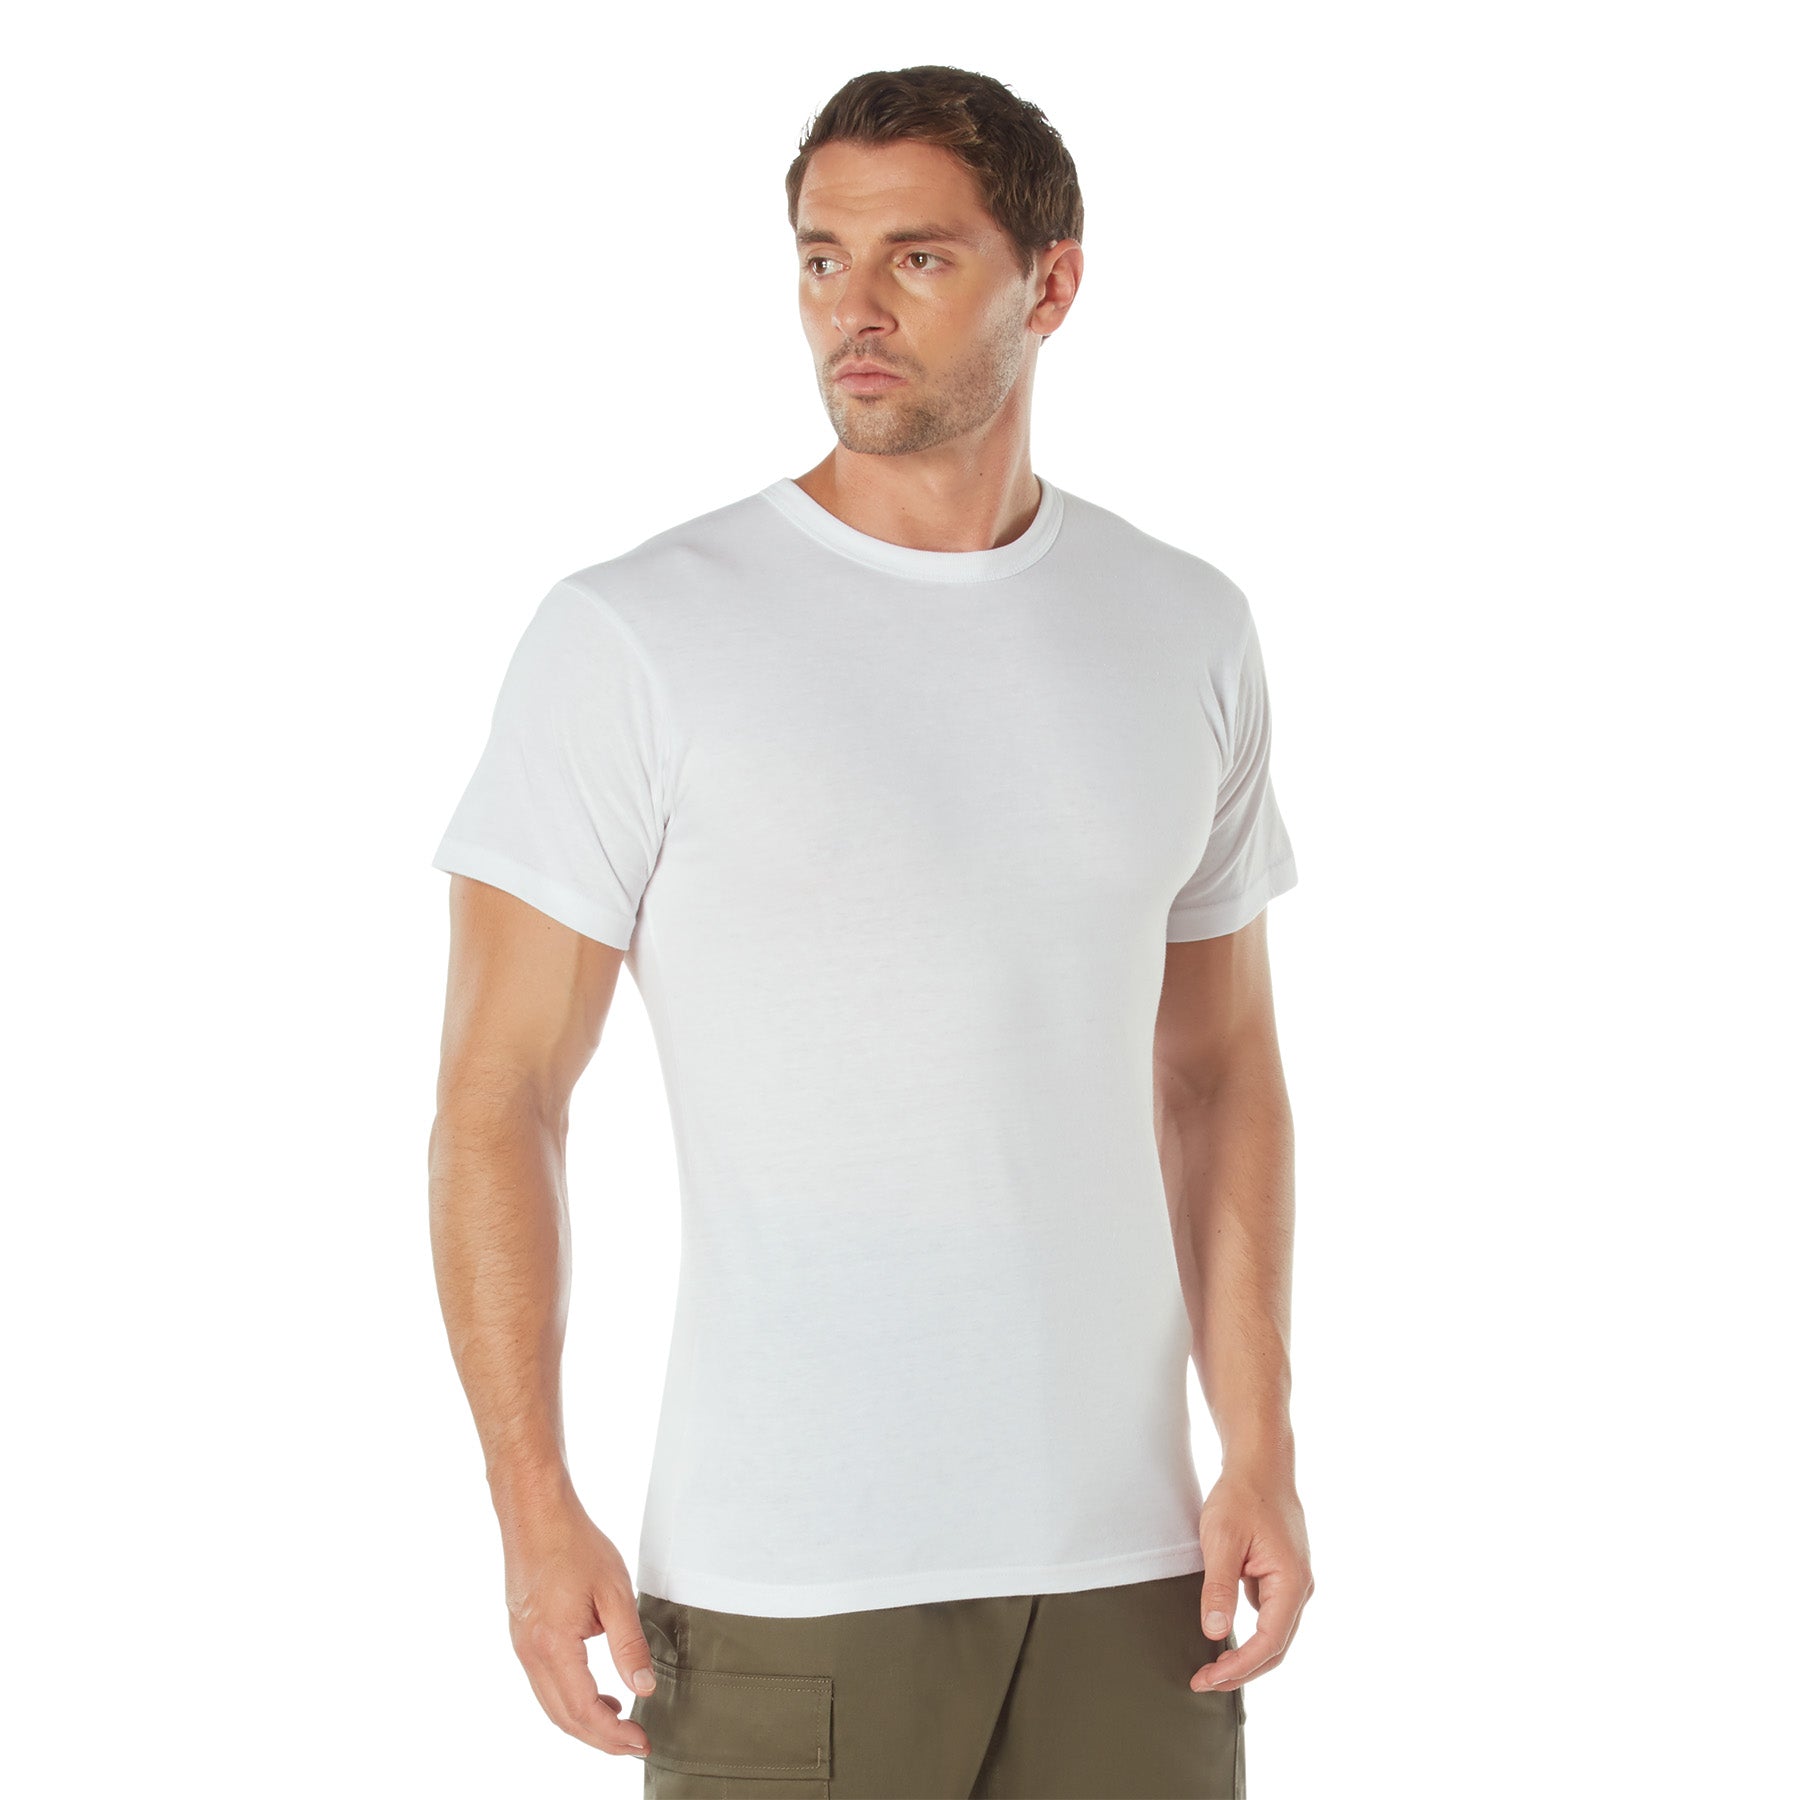 [AR 670-1][Military] Poly/Cotton T-Shirts White